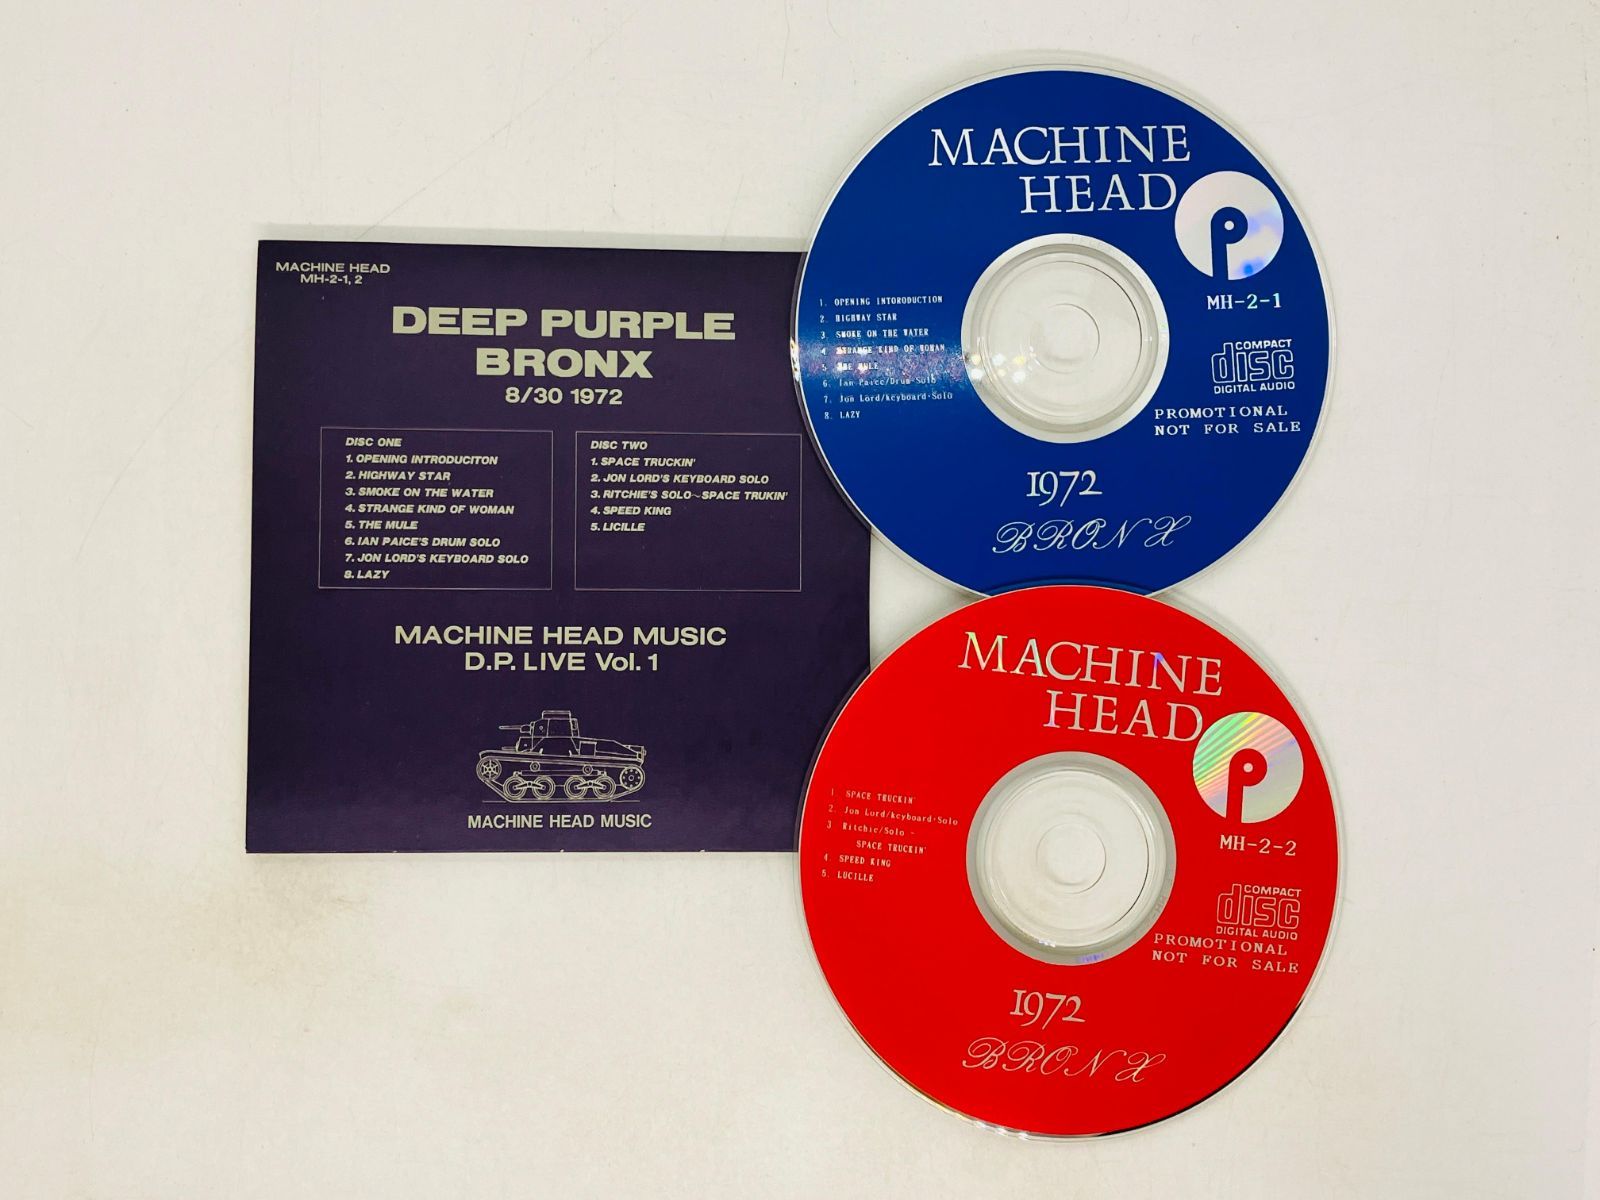 2CD DEEP PURPLE BRONX 1972 8/30 ディープ・パープル MACHINE HEAD